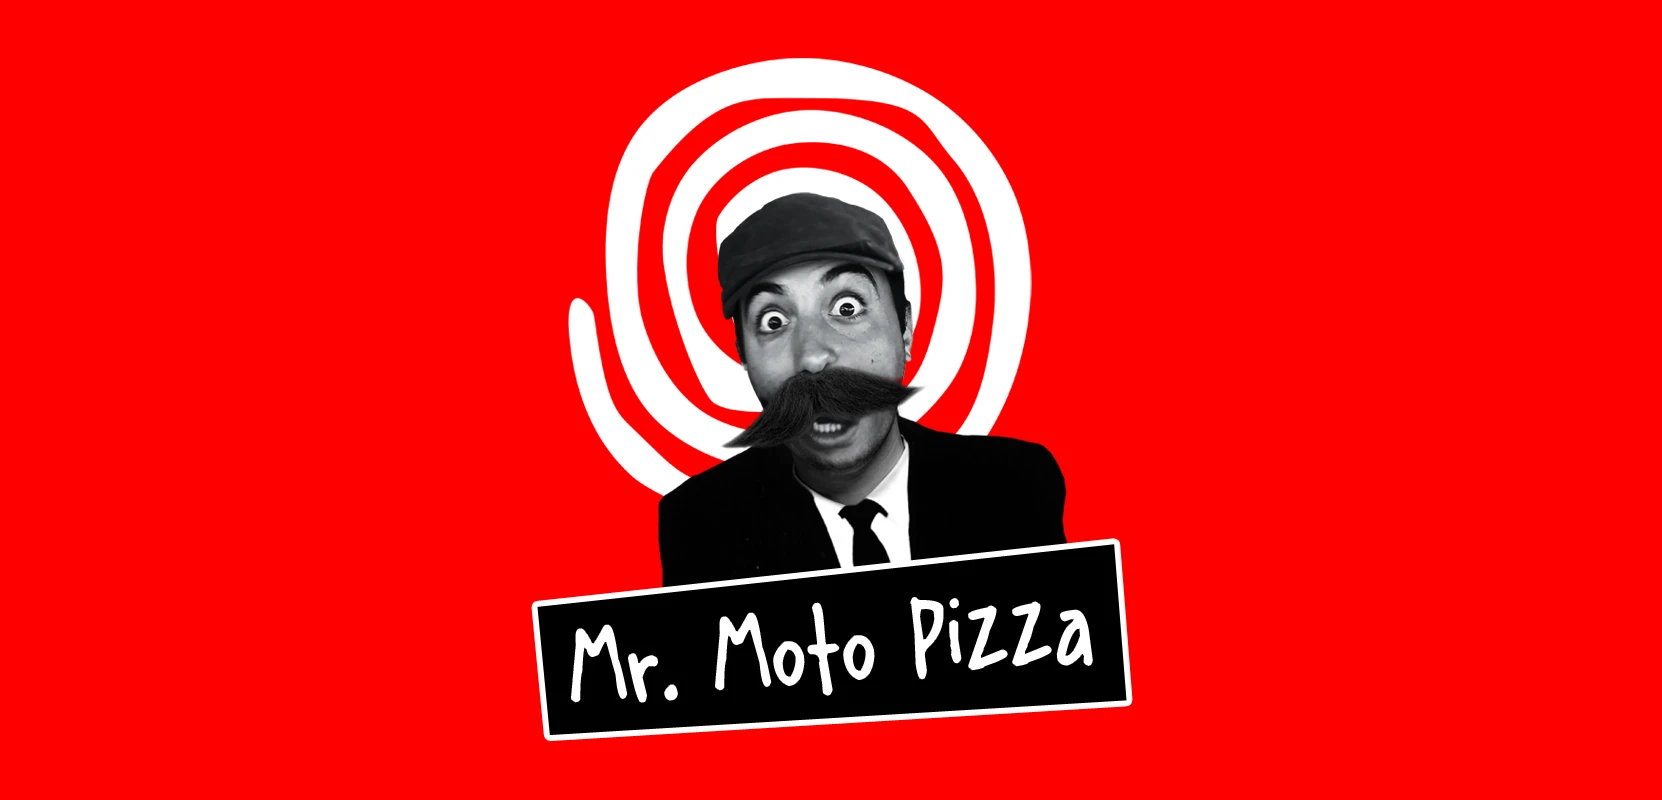 Mr Moto Pizza promotions 